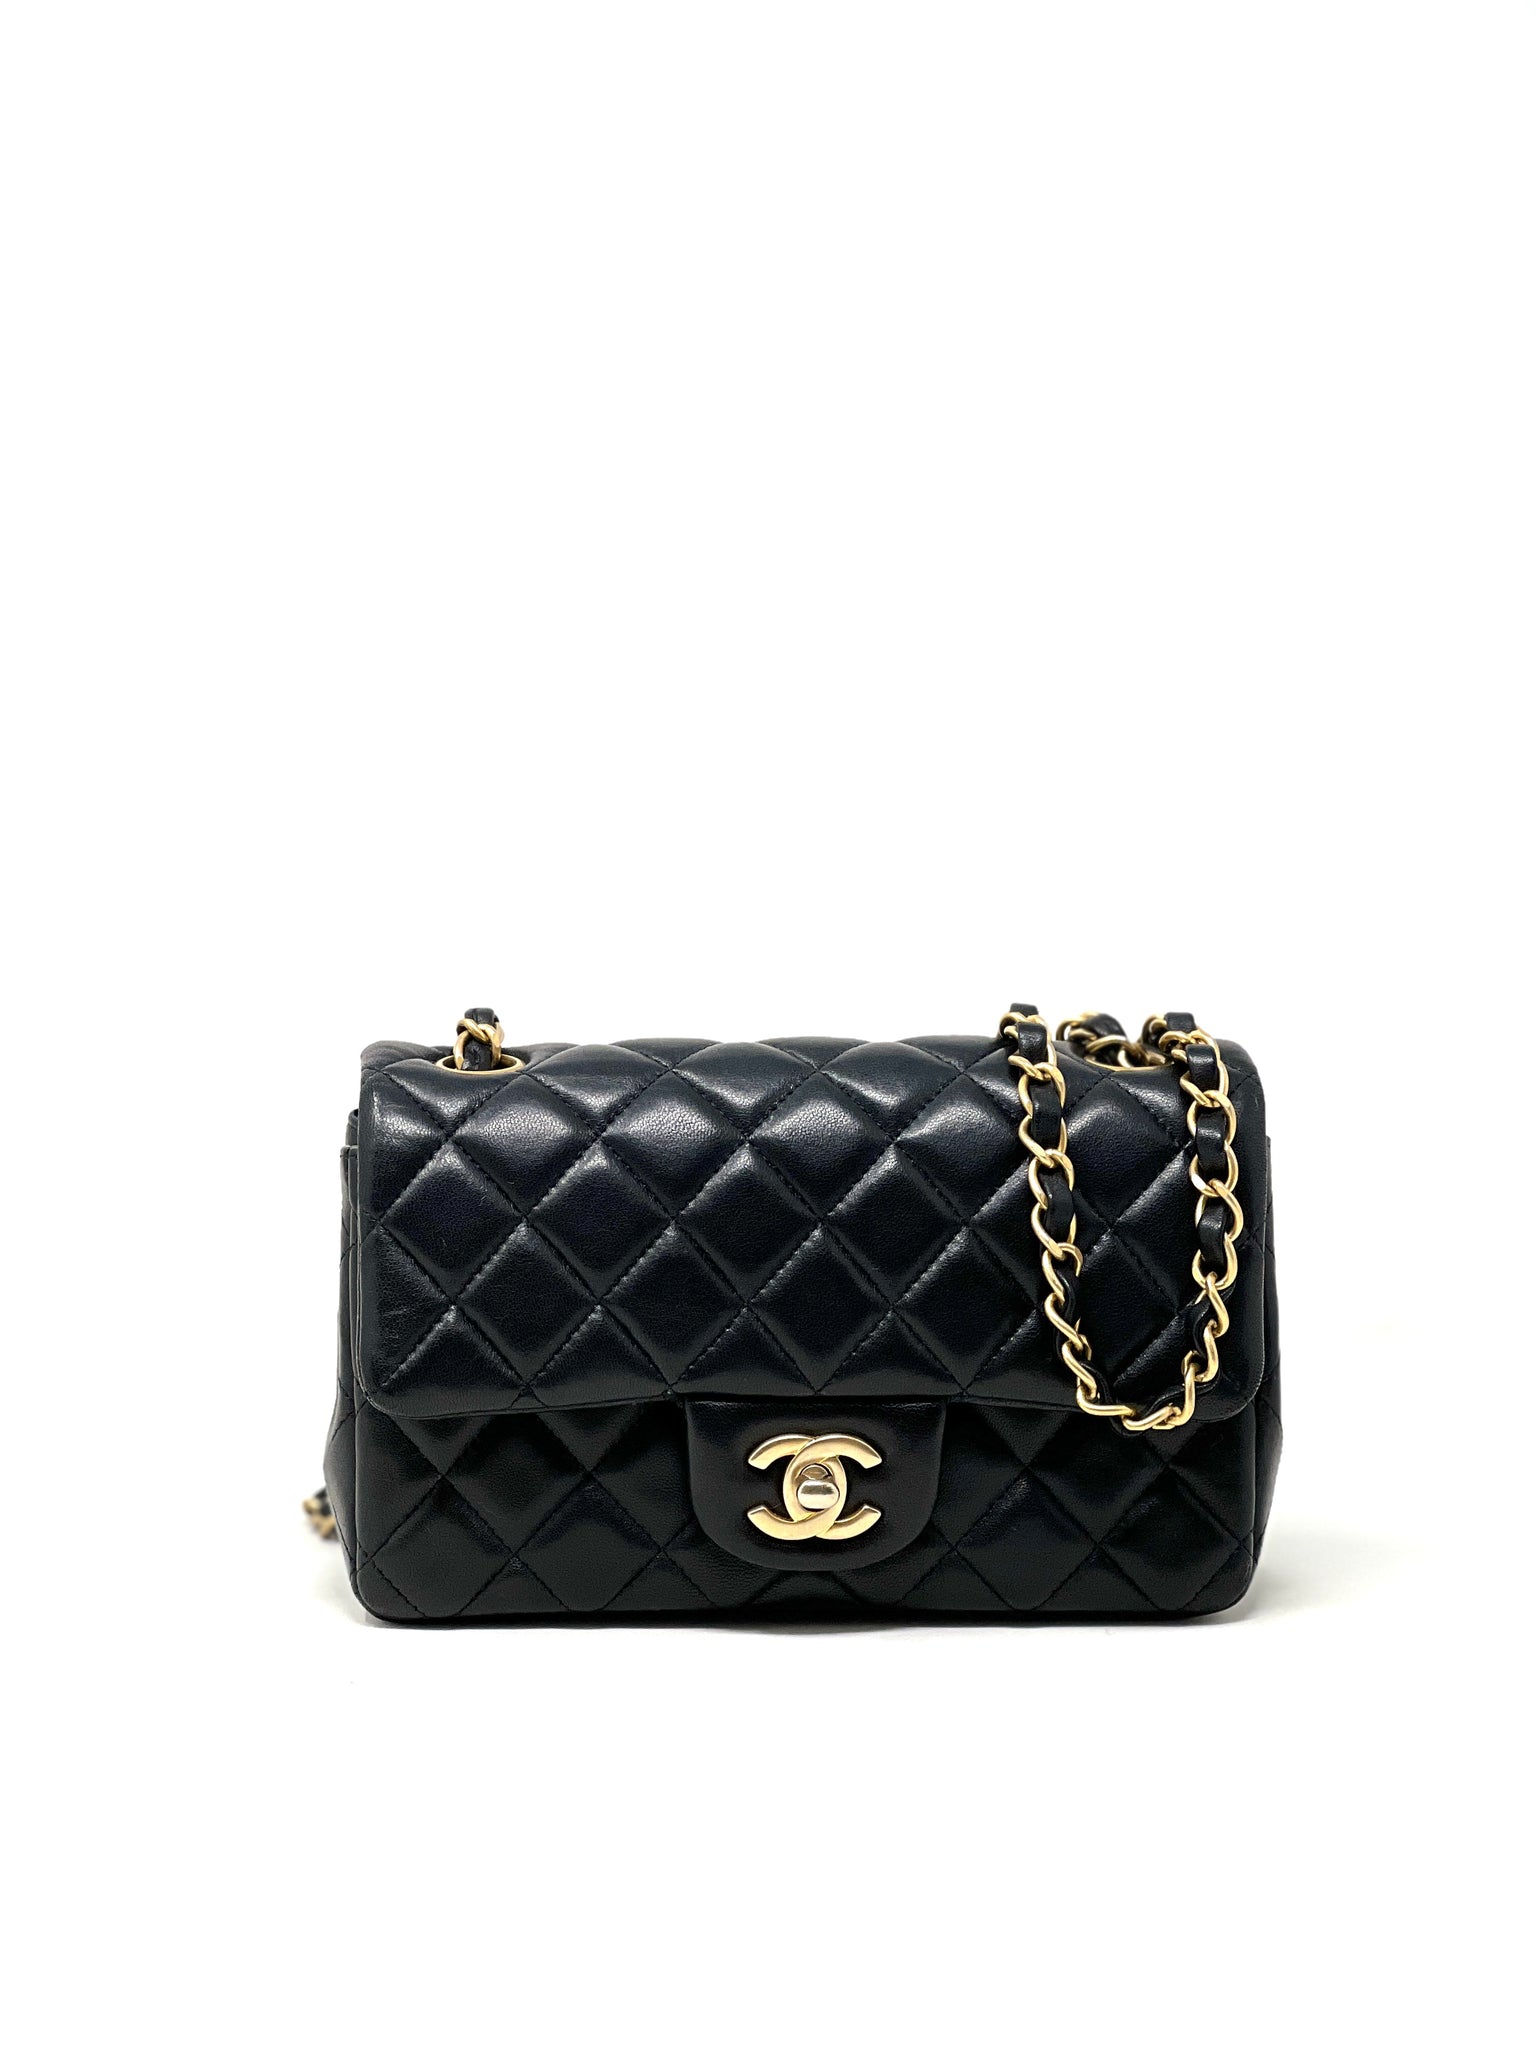 Loading  Chanel flap bag, Chanel bag classic, Chanel bag